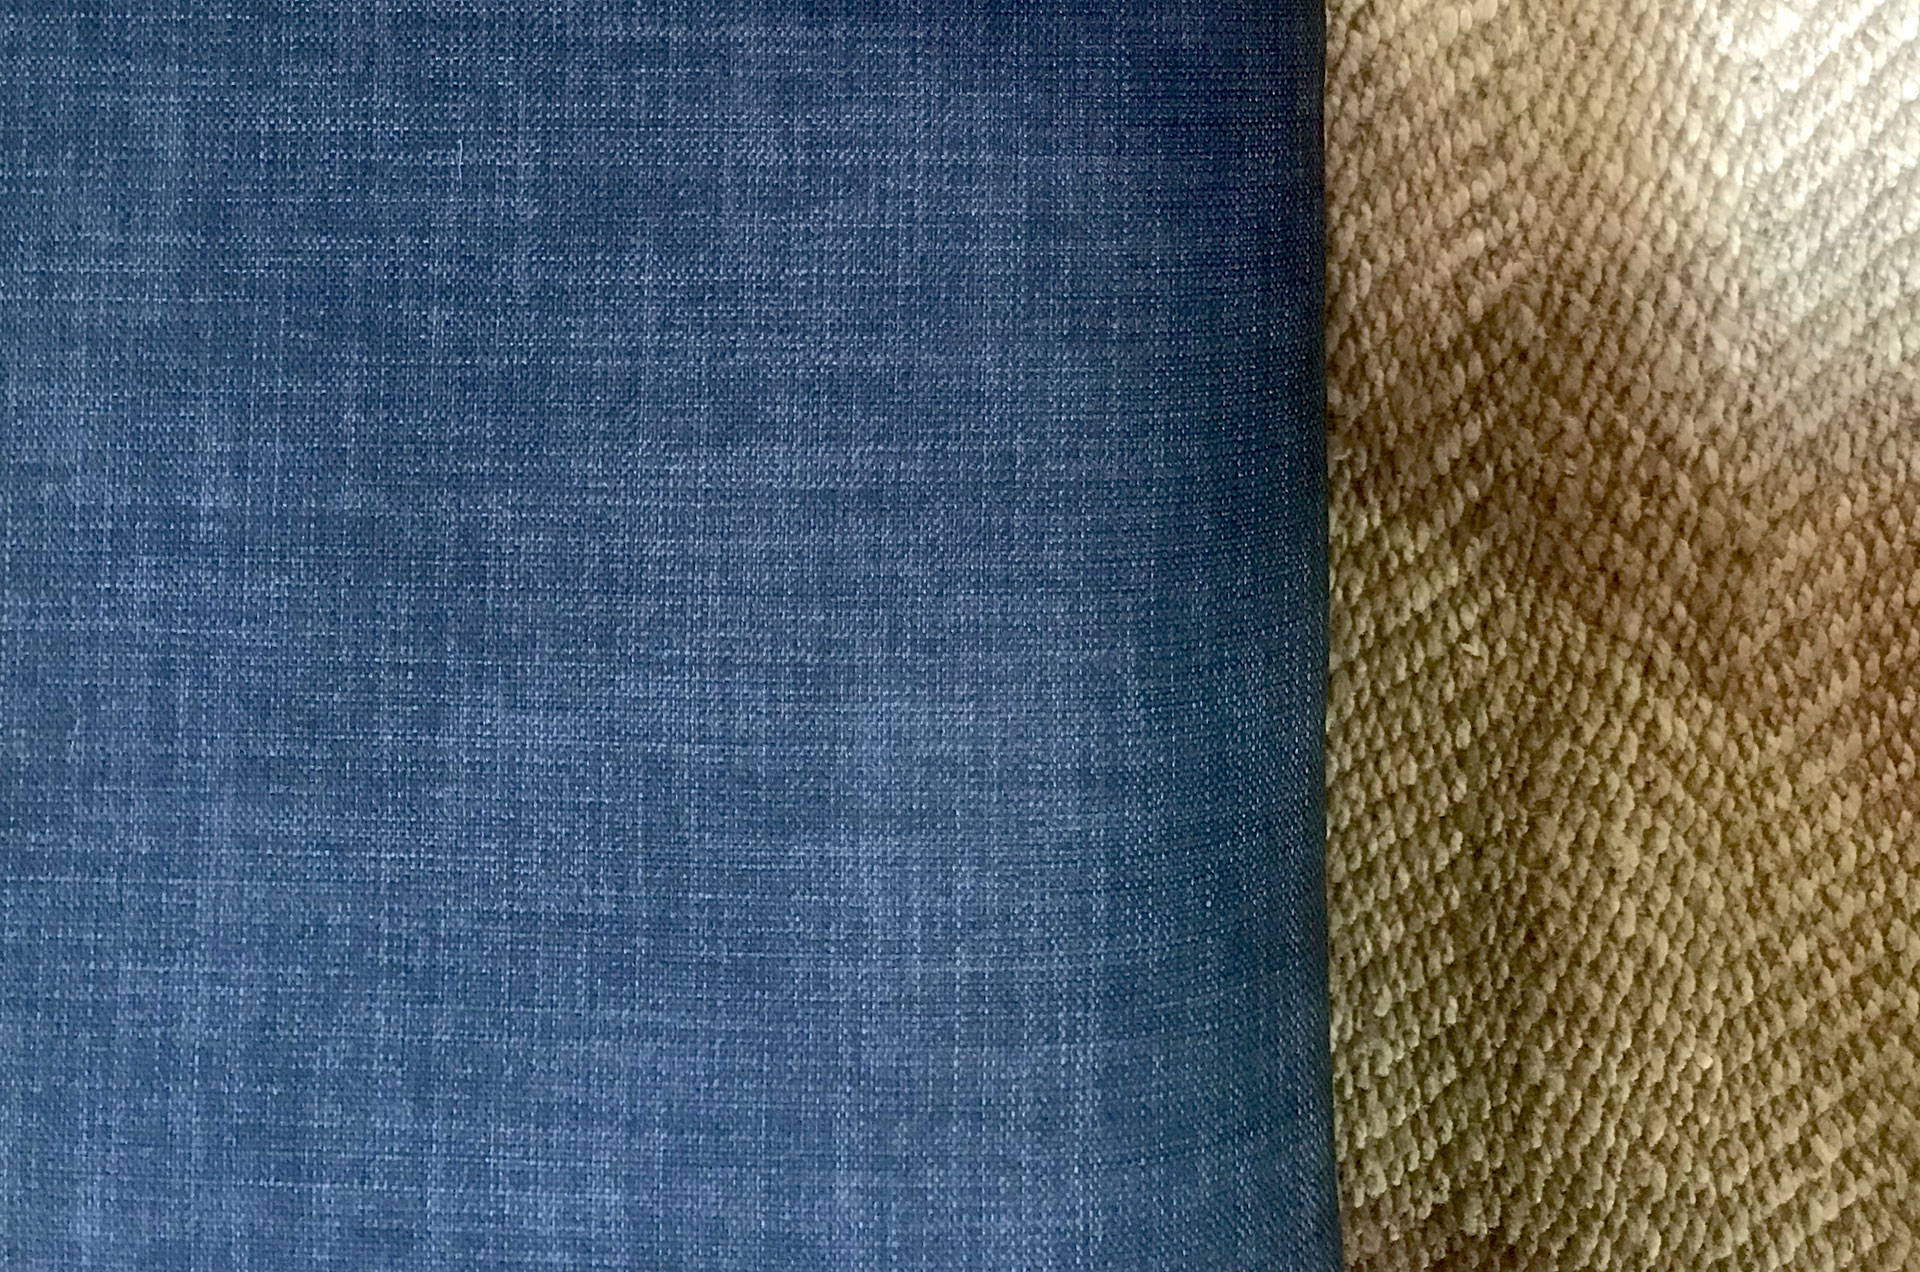 Fabric sofa material